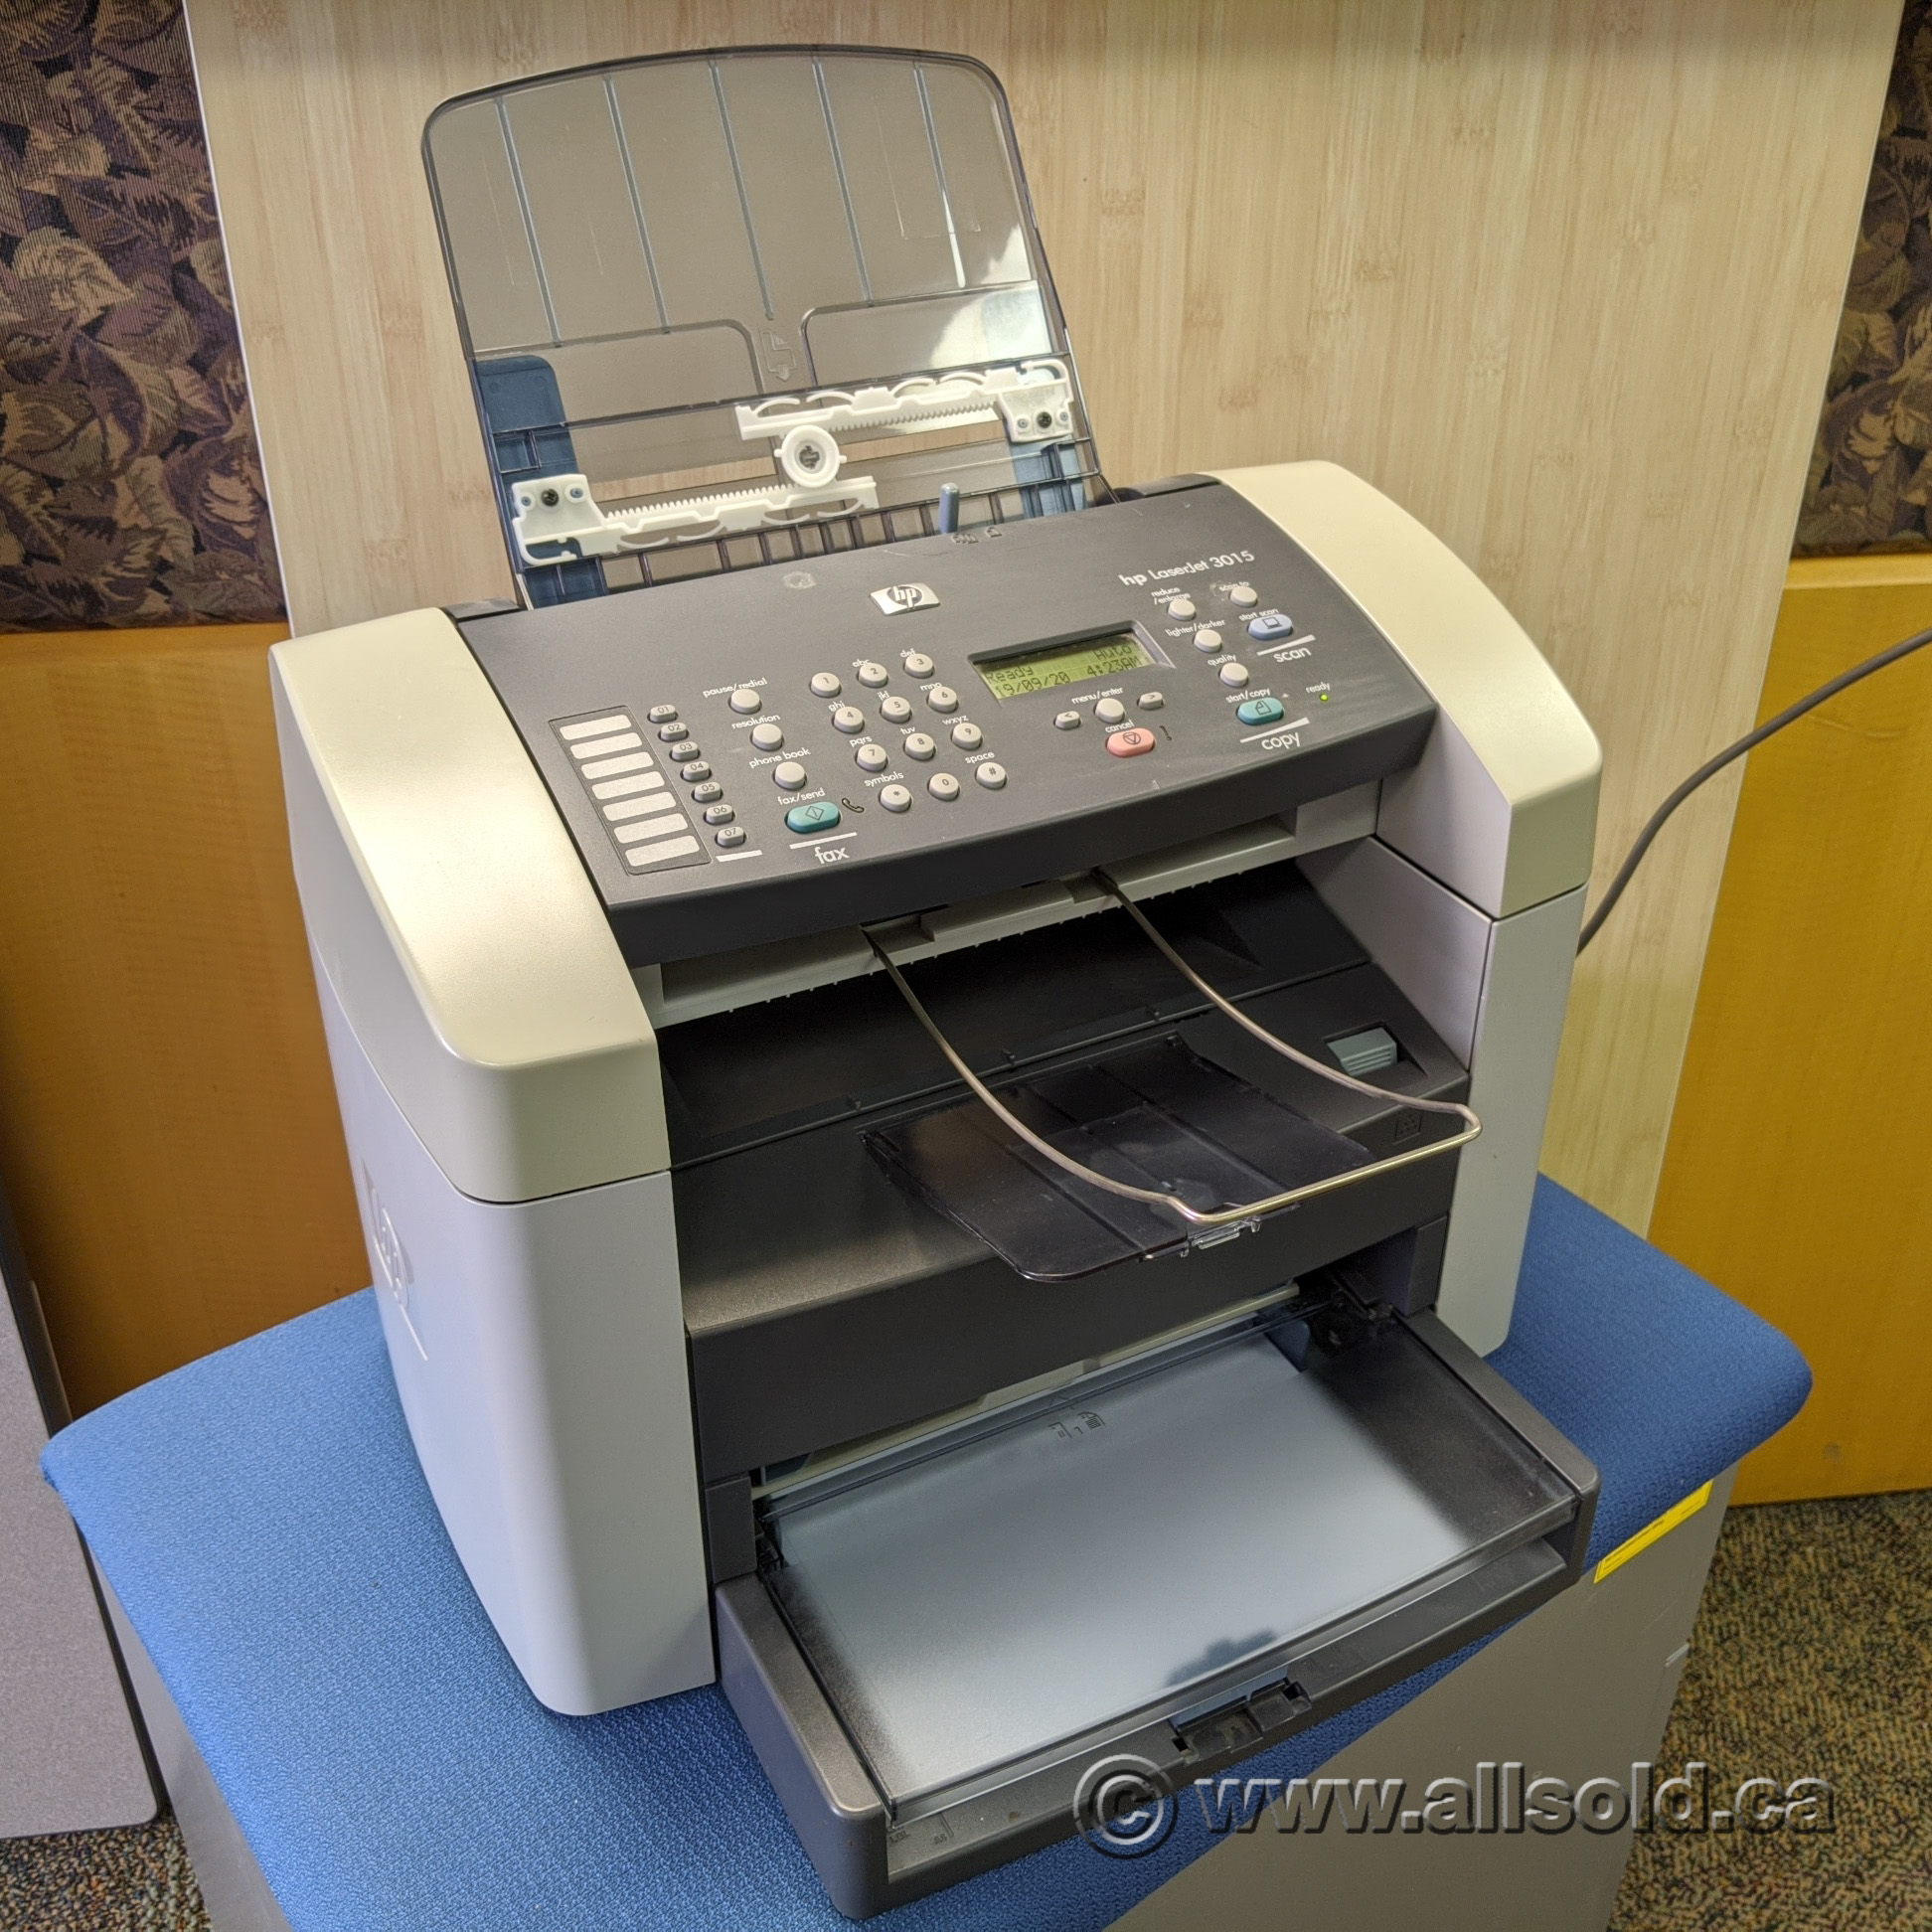 synet gryde radikal HP LaserJet 3015 Printer Fax Scanner Copy Black/White - Allsold.ca - Buy &  Sell Used Office Furniture Calgary